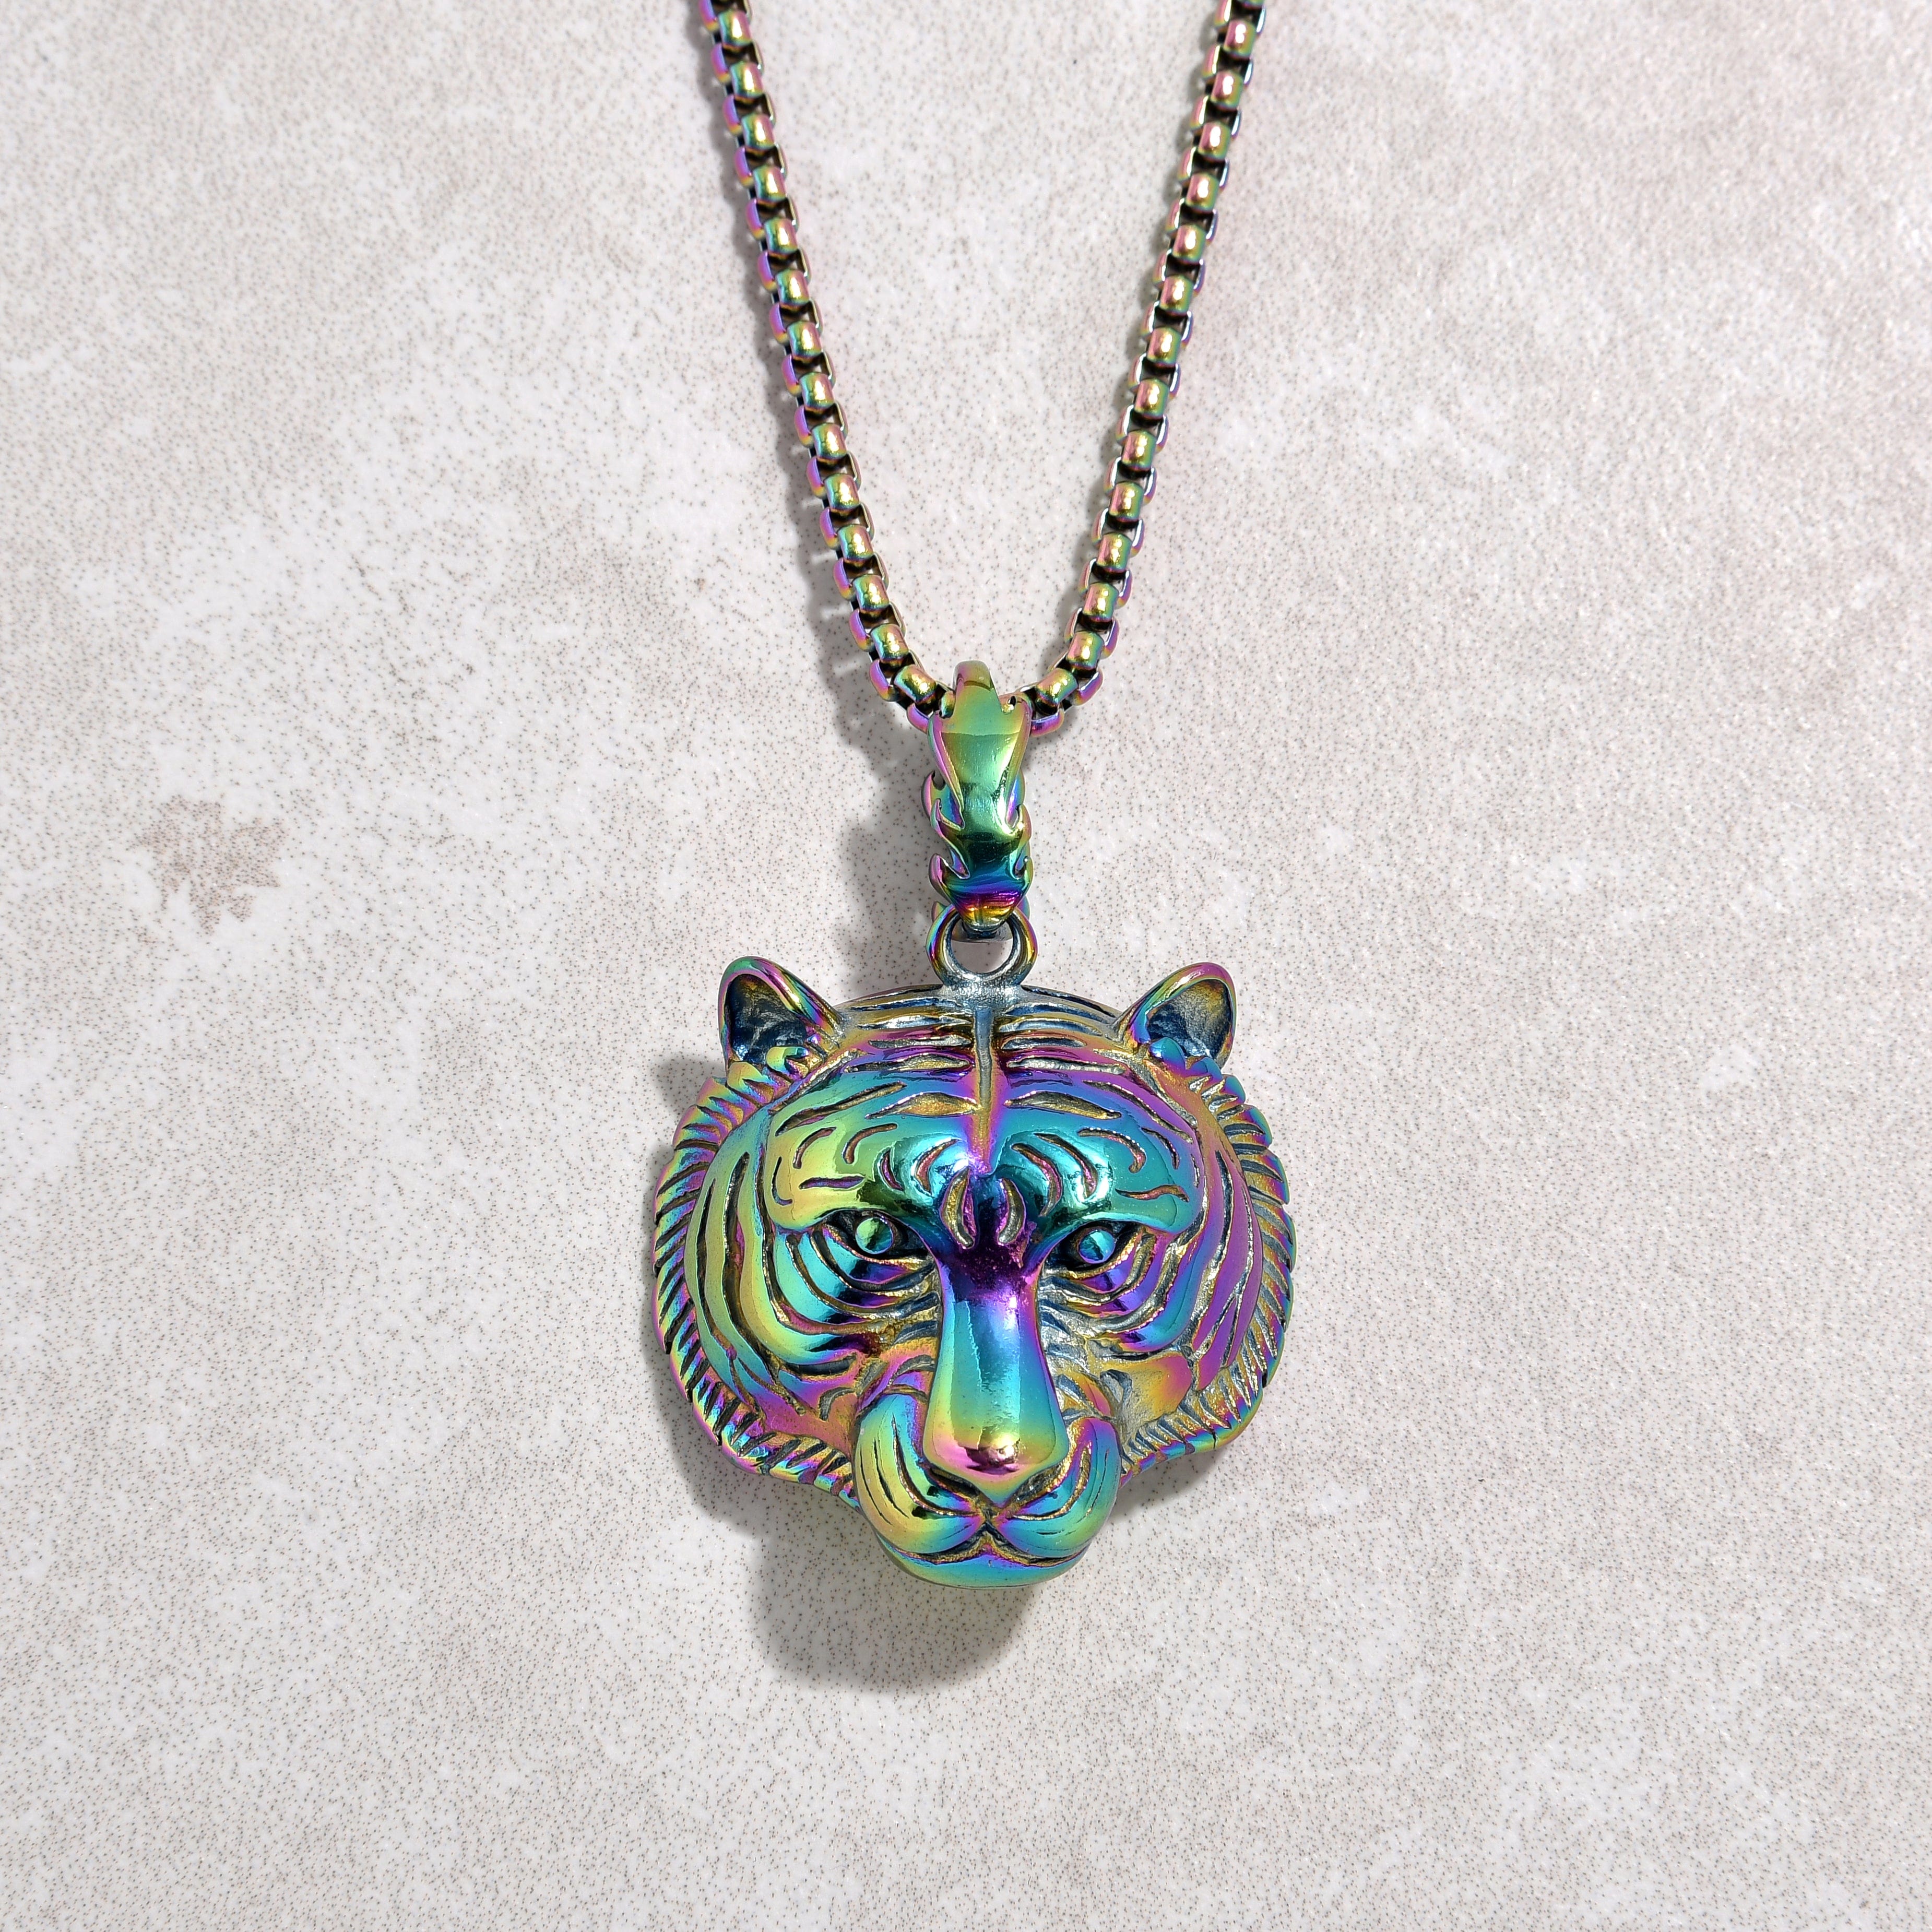 Kalifano Steel Hearts Jewelry Aurora Borealis Tiger Steel Hearts Necklace SHN521-AB